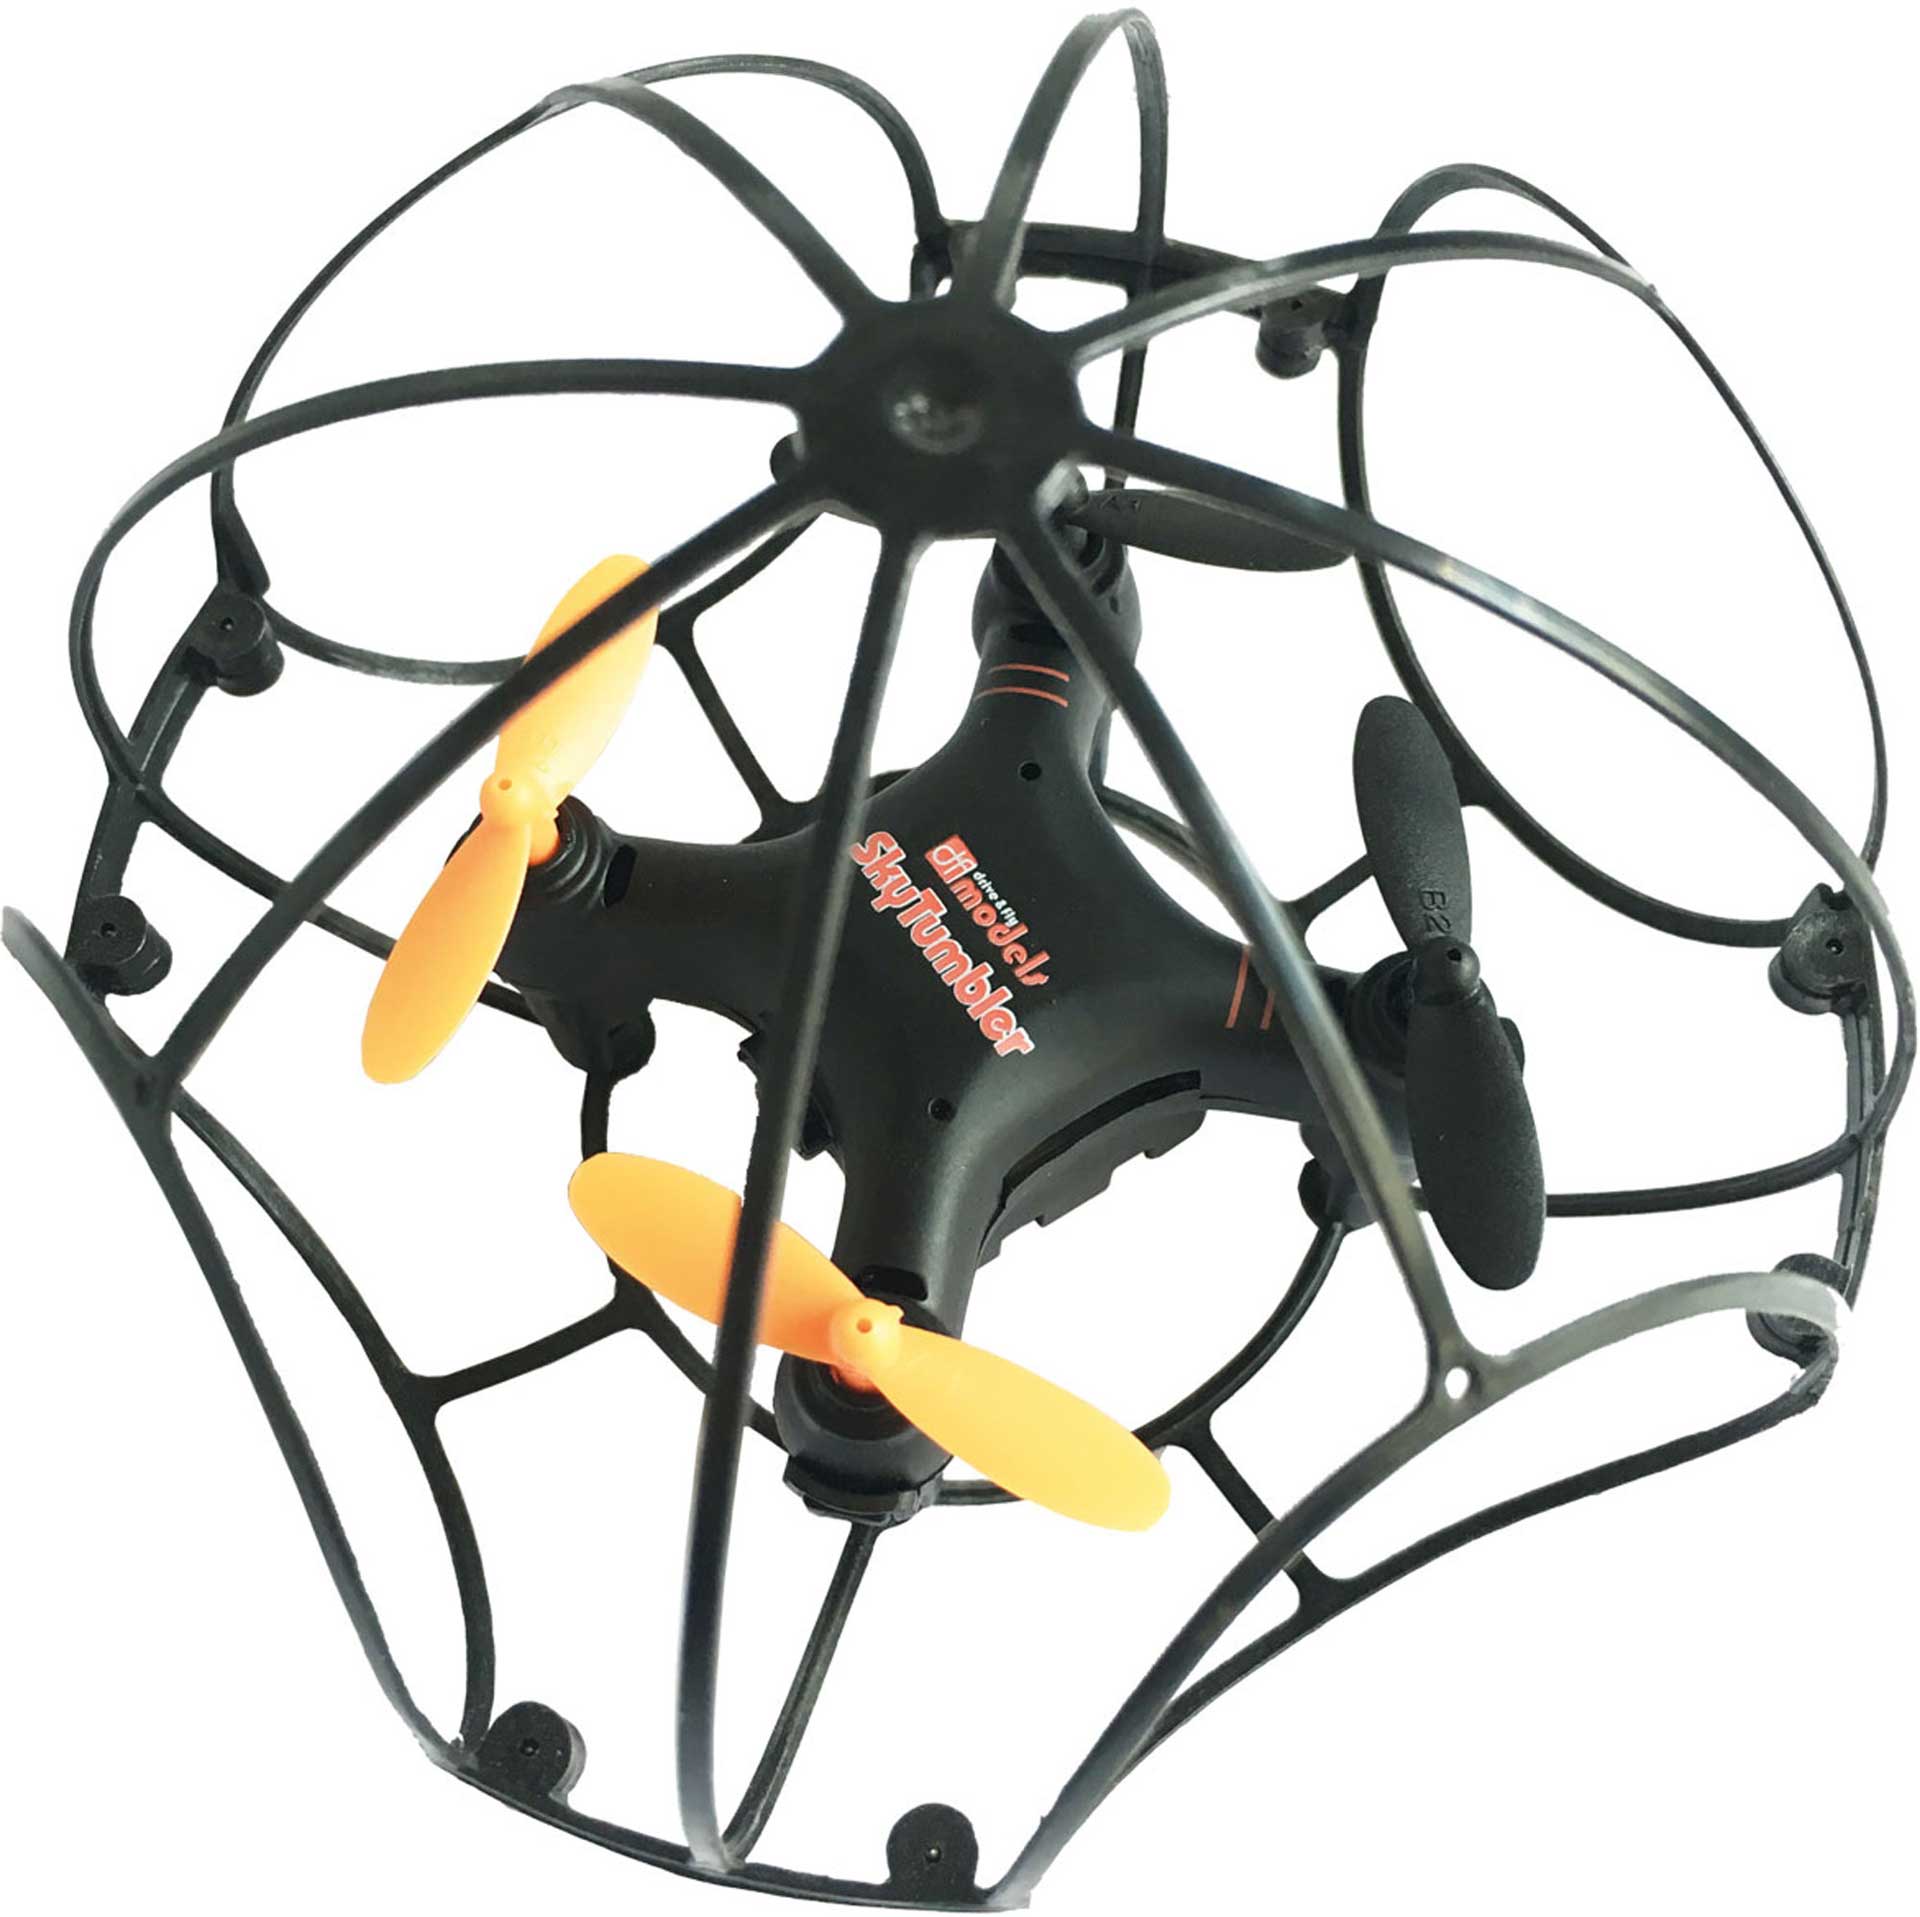 DRIVE & FLY MODELS SKY TUMBLER DRONE RTF drone